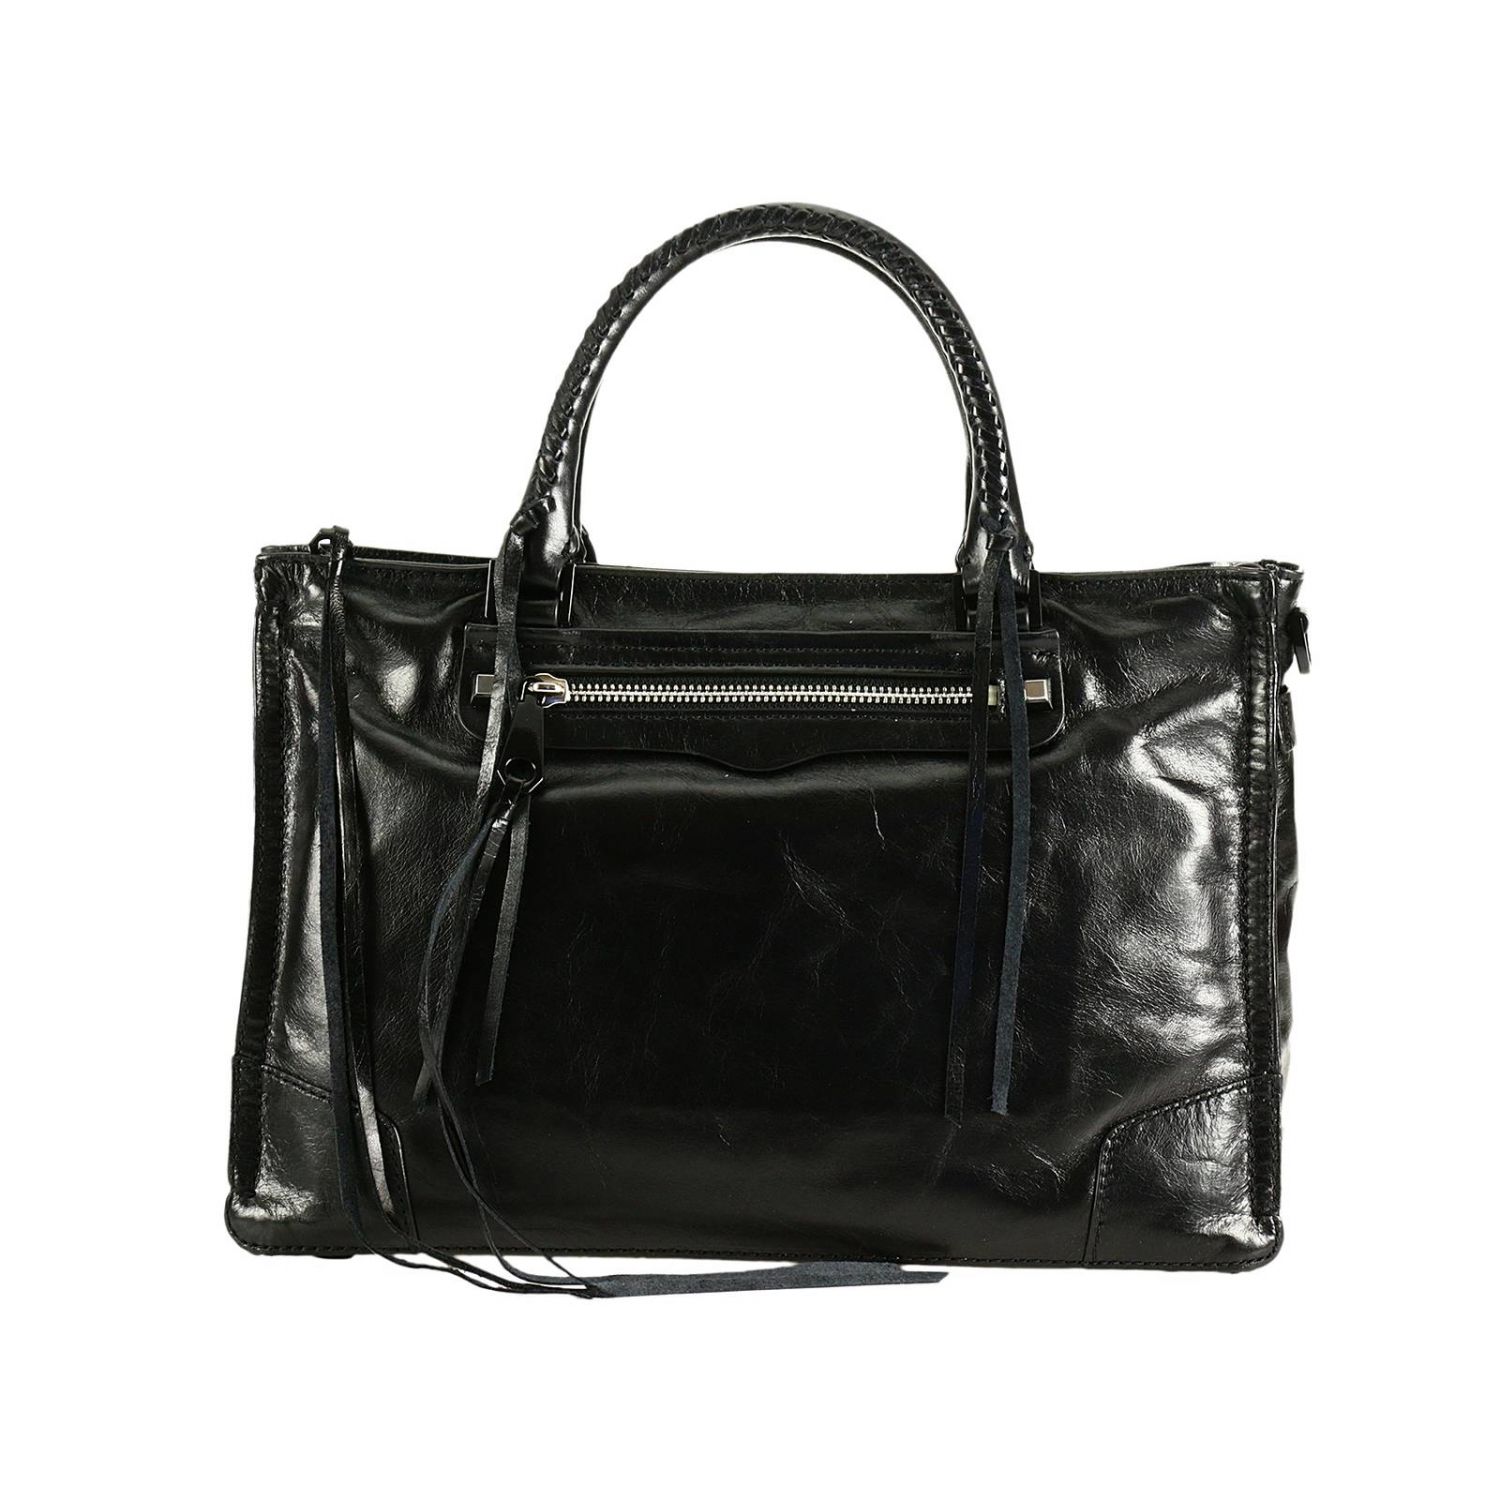 Rebecca Minkoff Outlet: Crossbody bags women - Black | Crossbody Bags ...